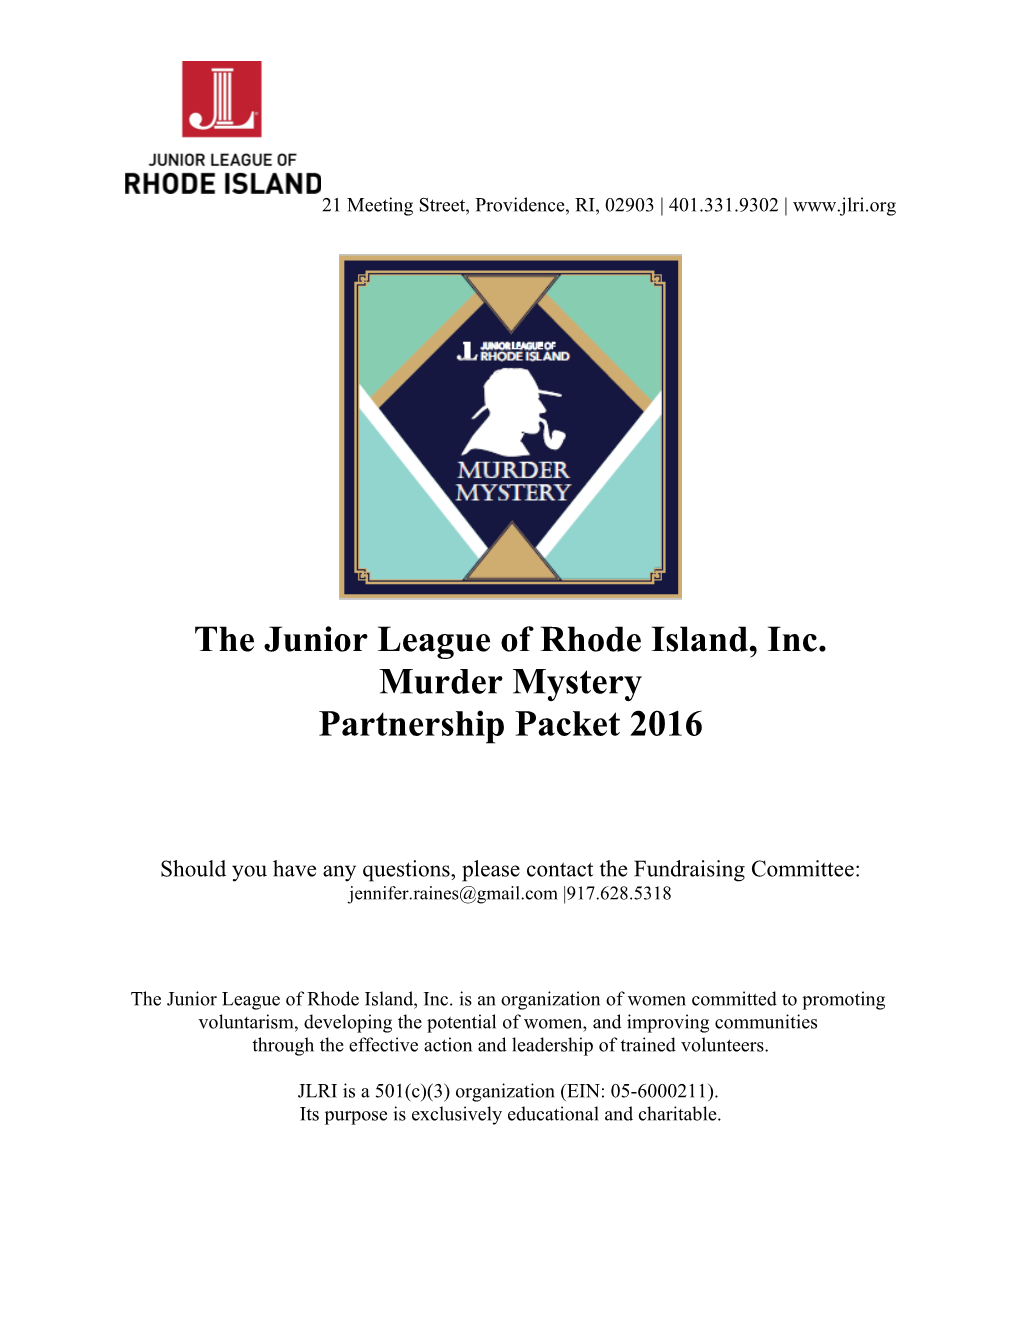 The Junior League of Rhode Island, Inc